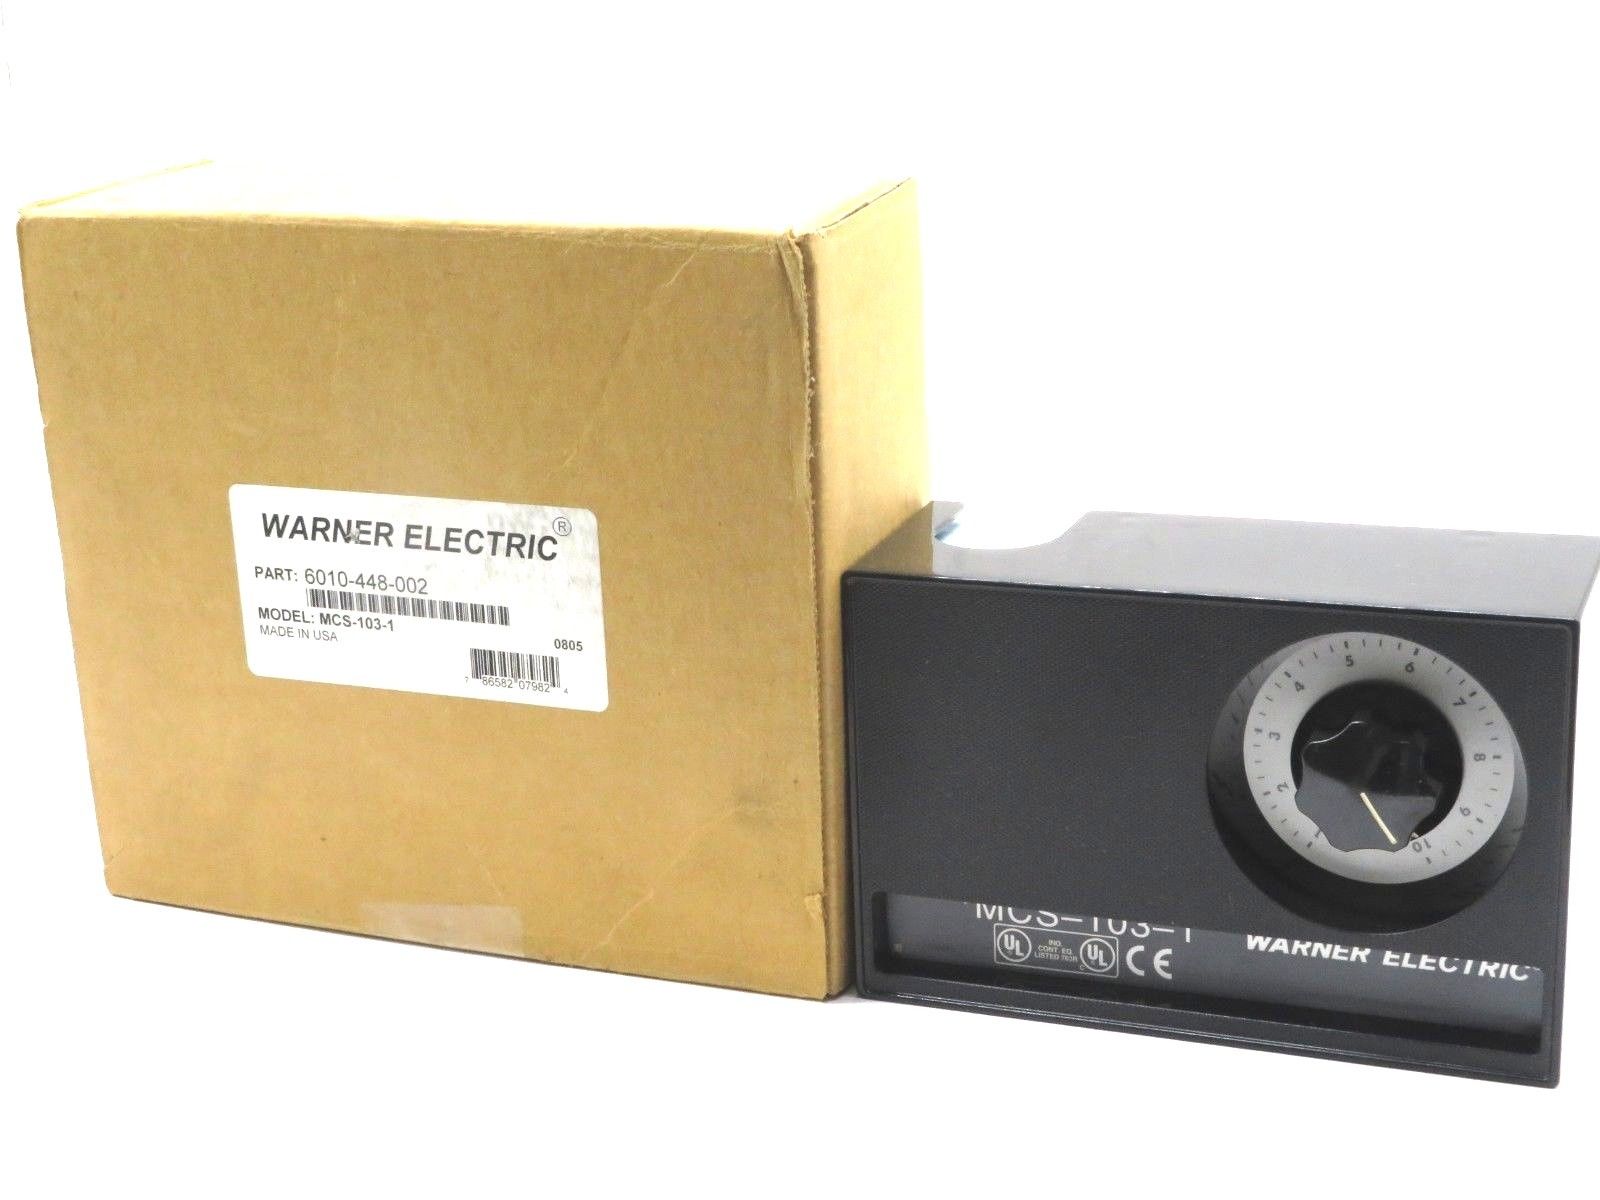 Warner Electric 6010-448-002 Control MSC-103-1 